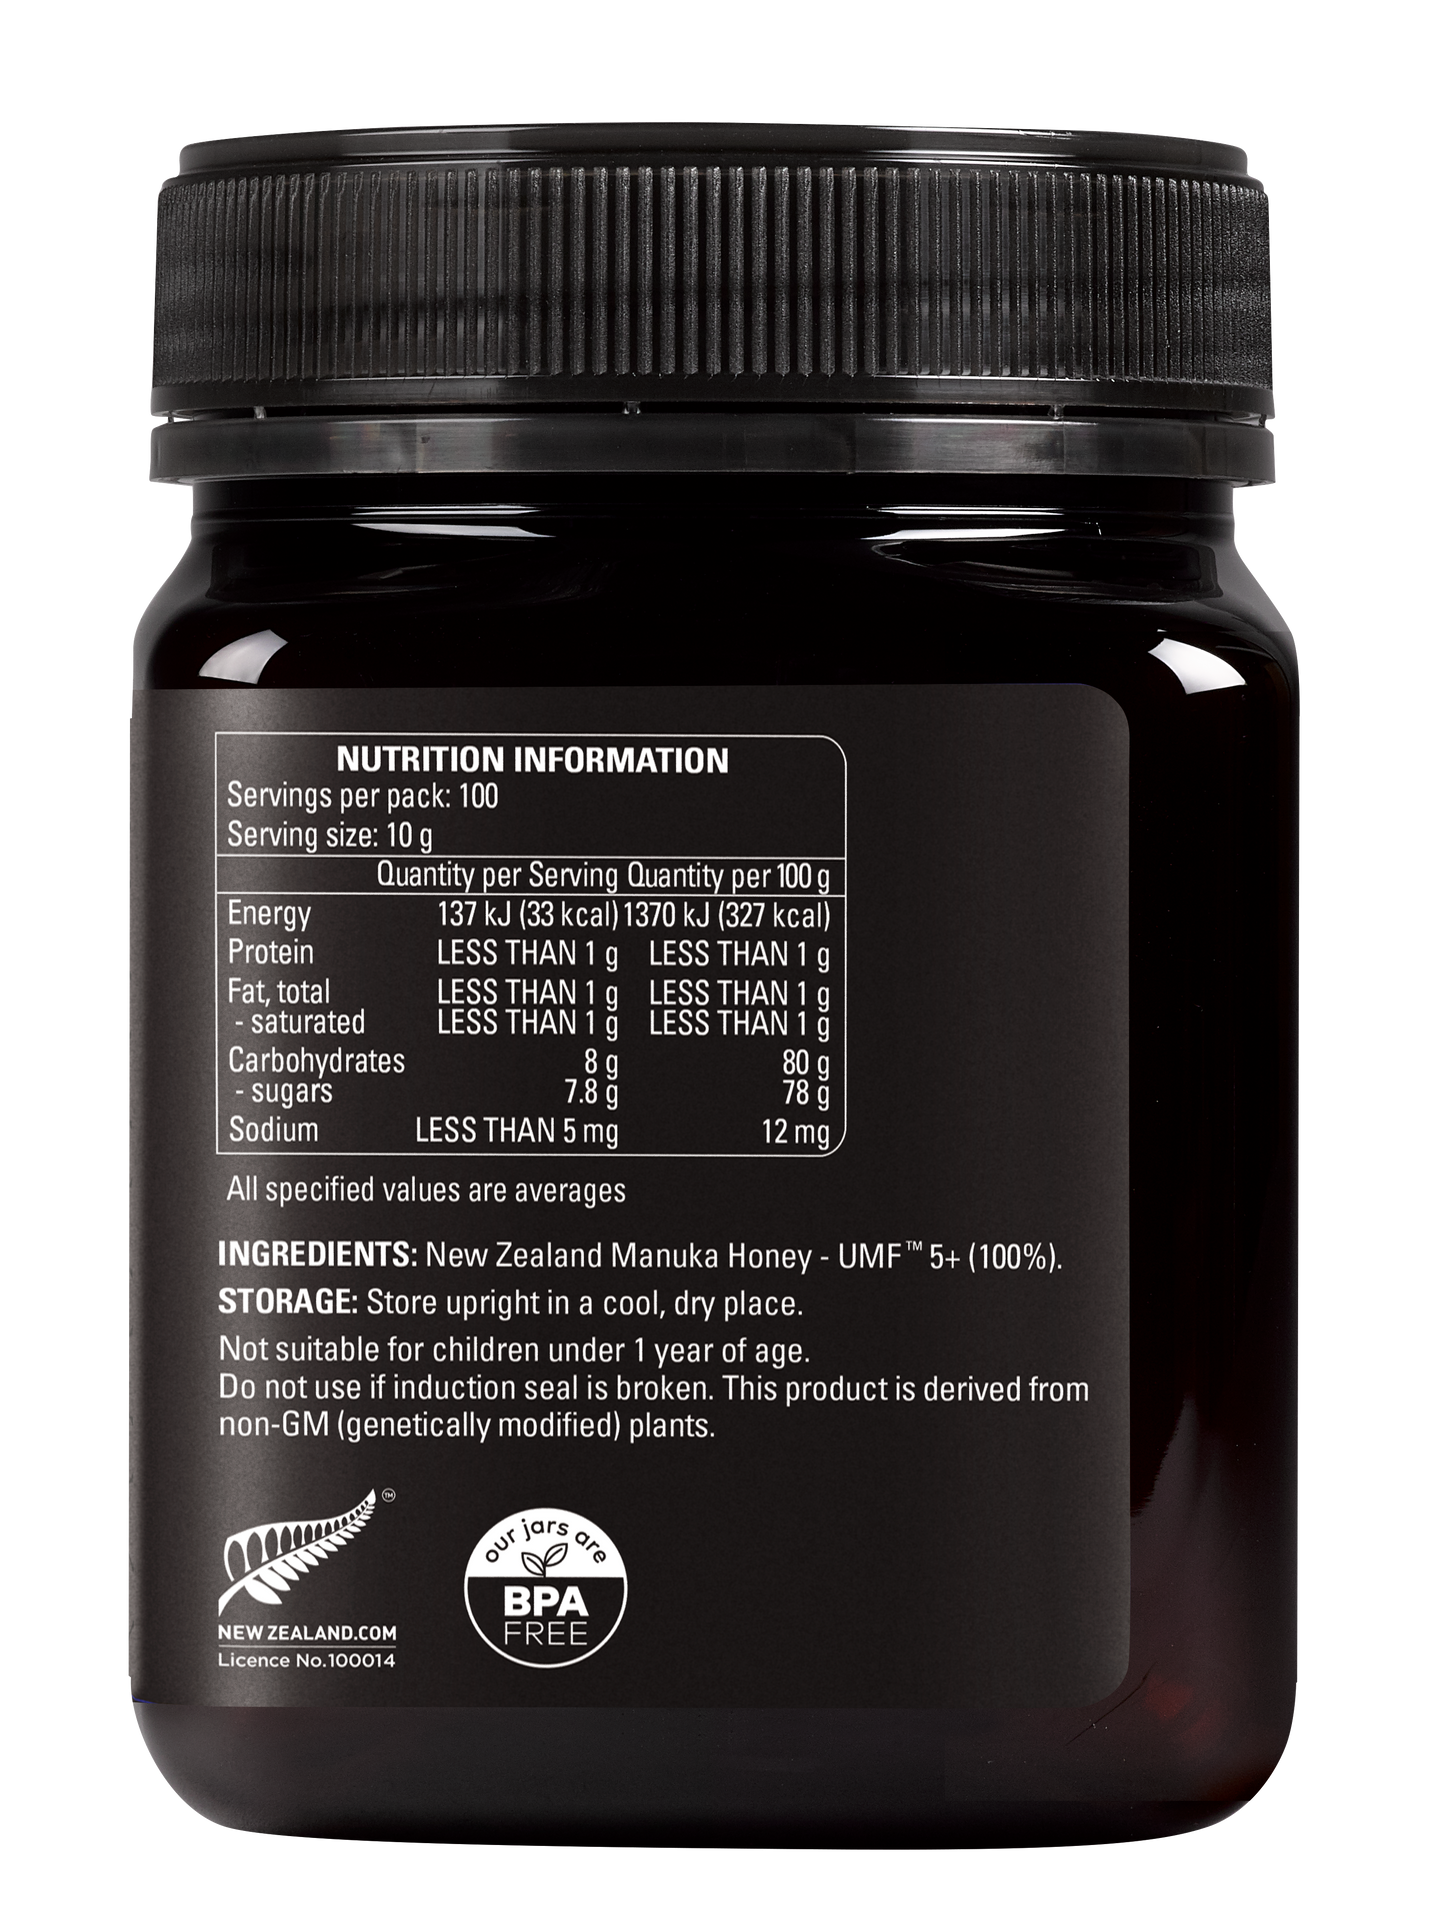 30% Off [Bundle of 6] Comvita Manuka Honey UMF™ 5+, 1 kg.